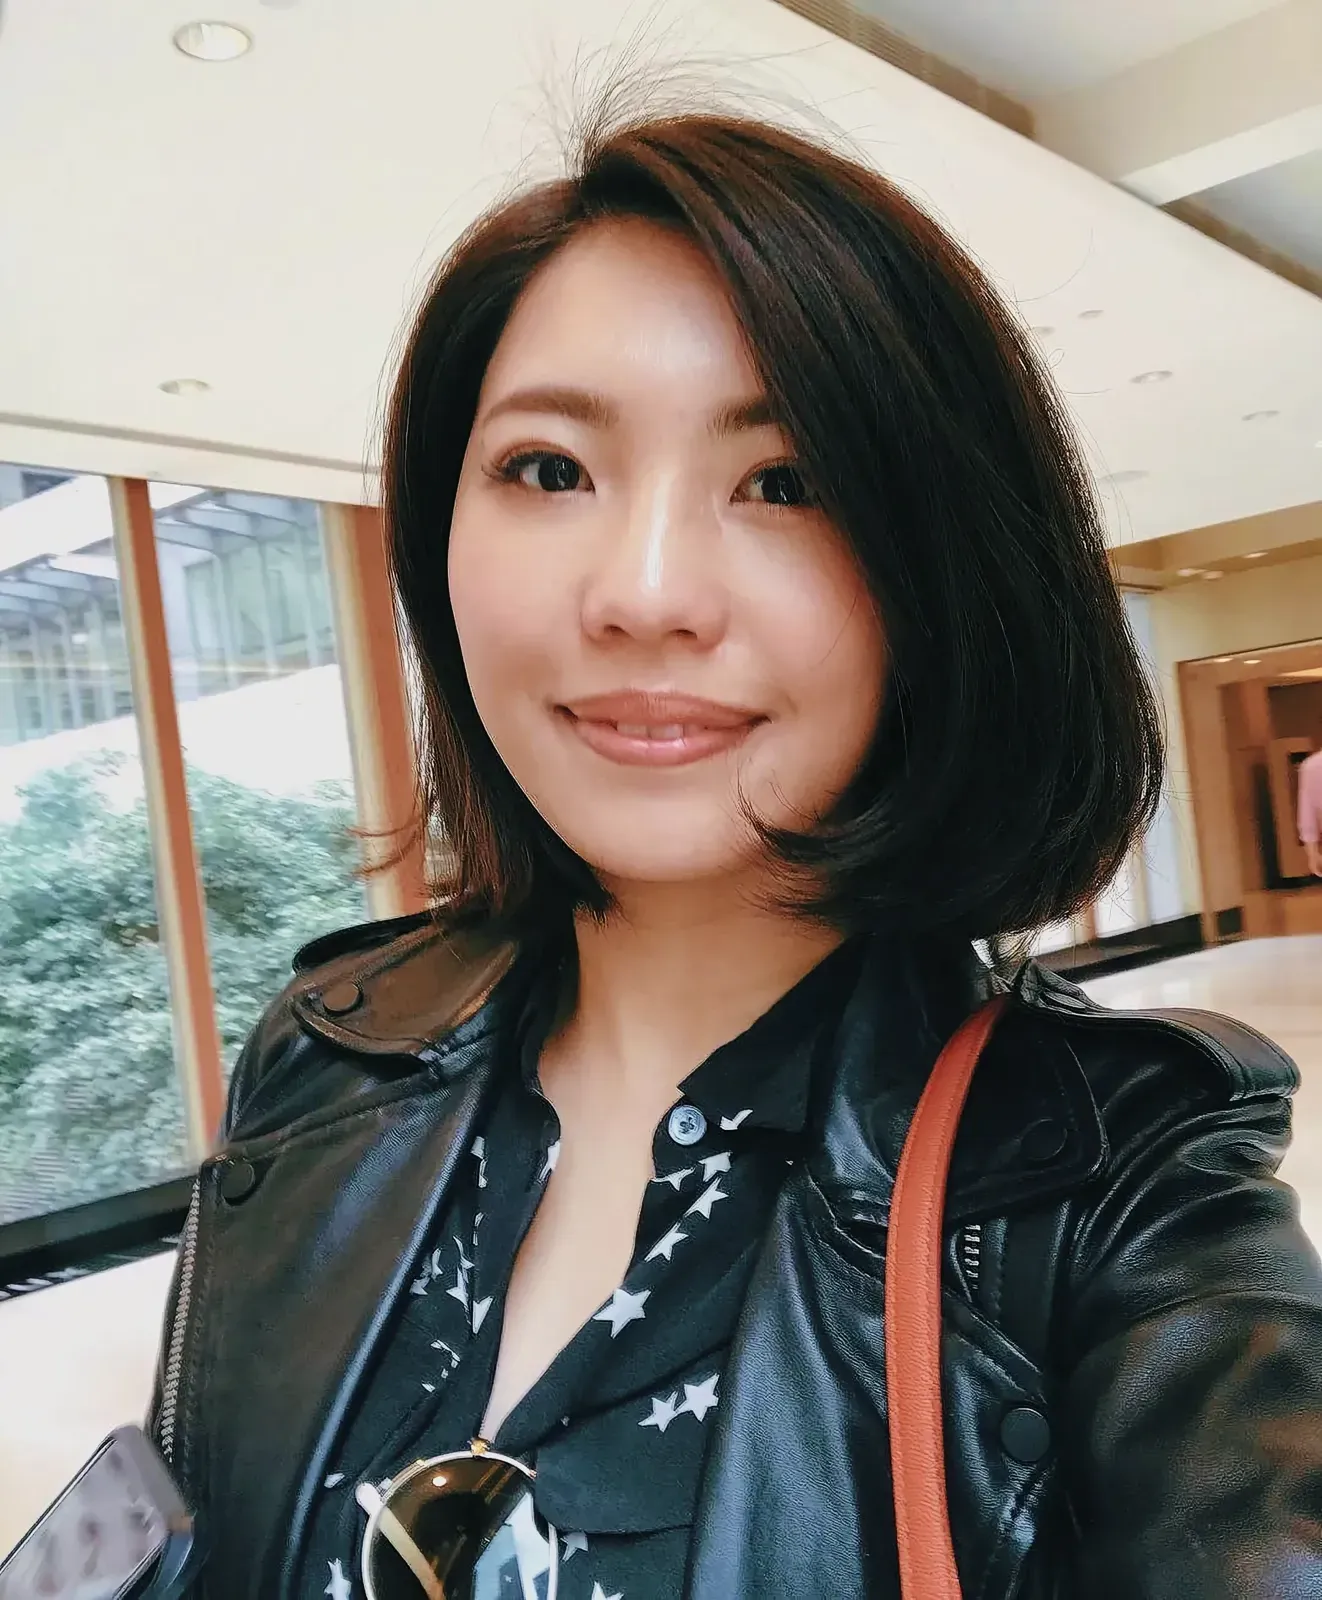 Stylish woman in black leather jacket taking a selfie